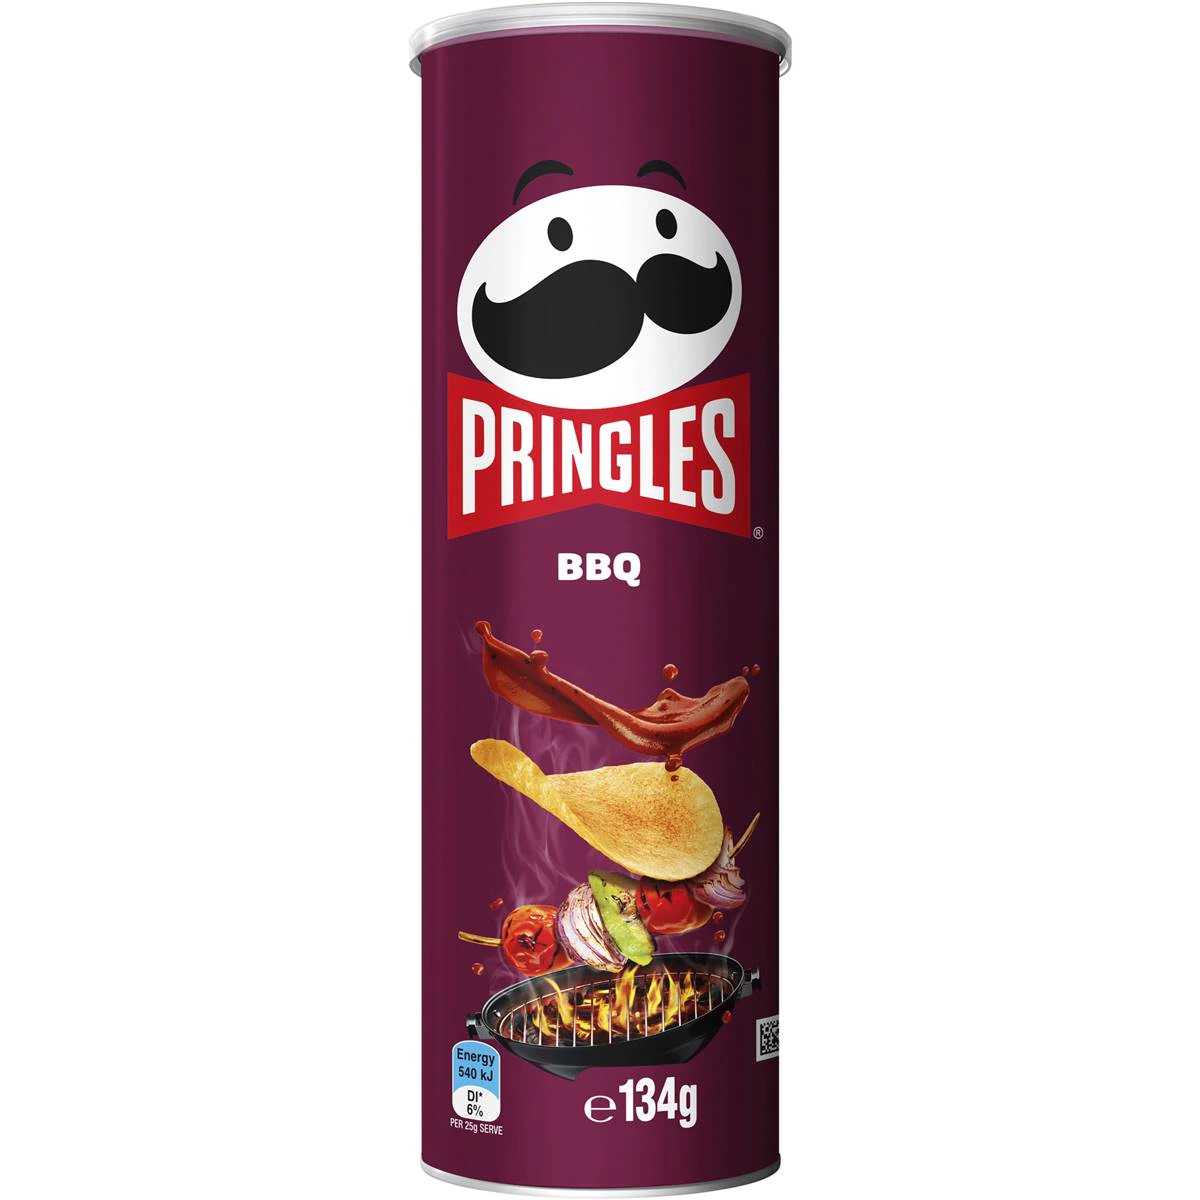 Pringles BBQ Crisps 134g